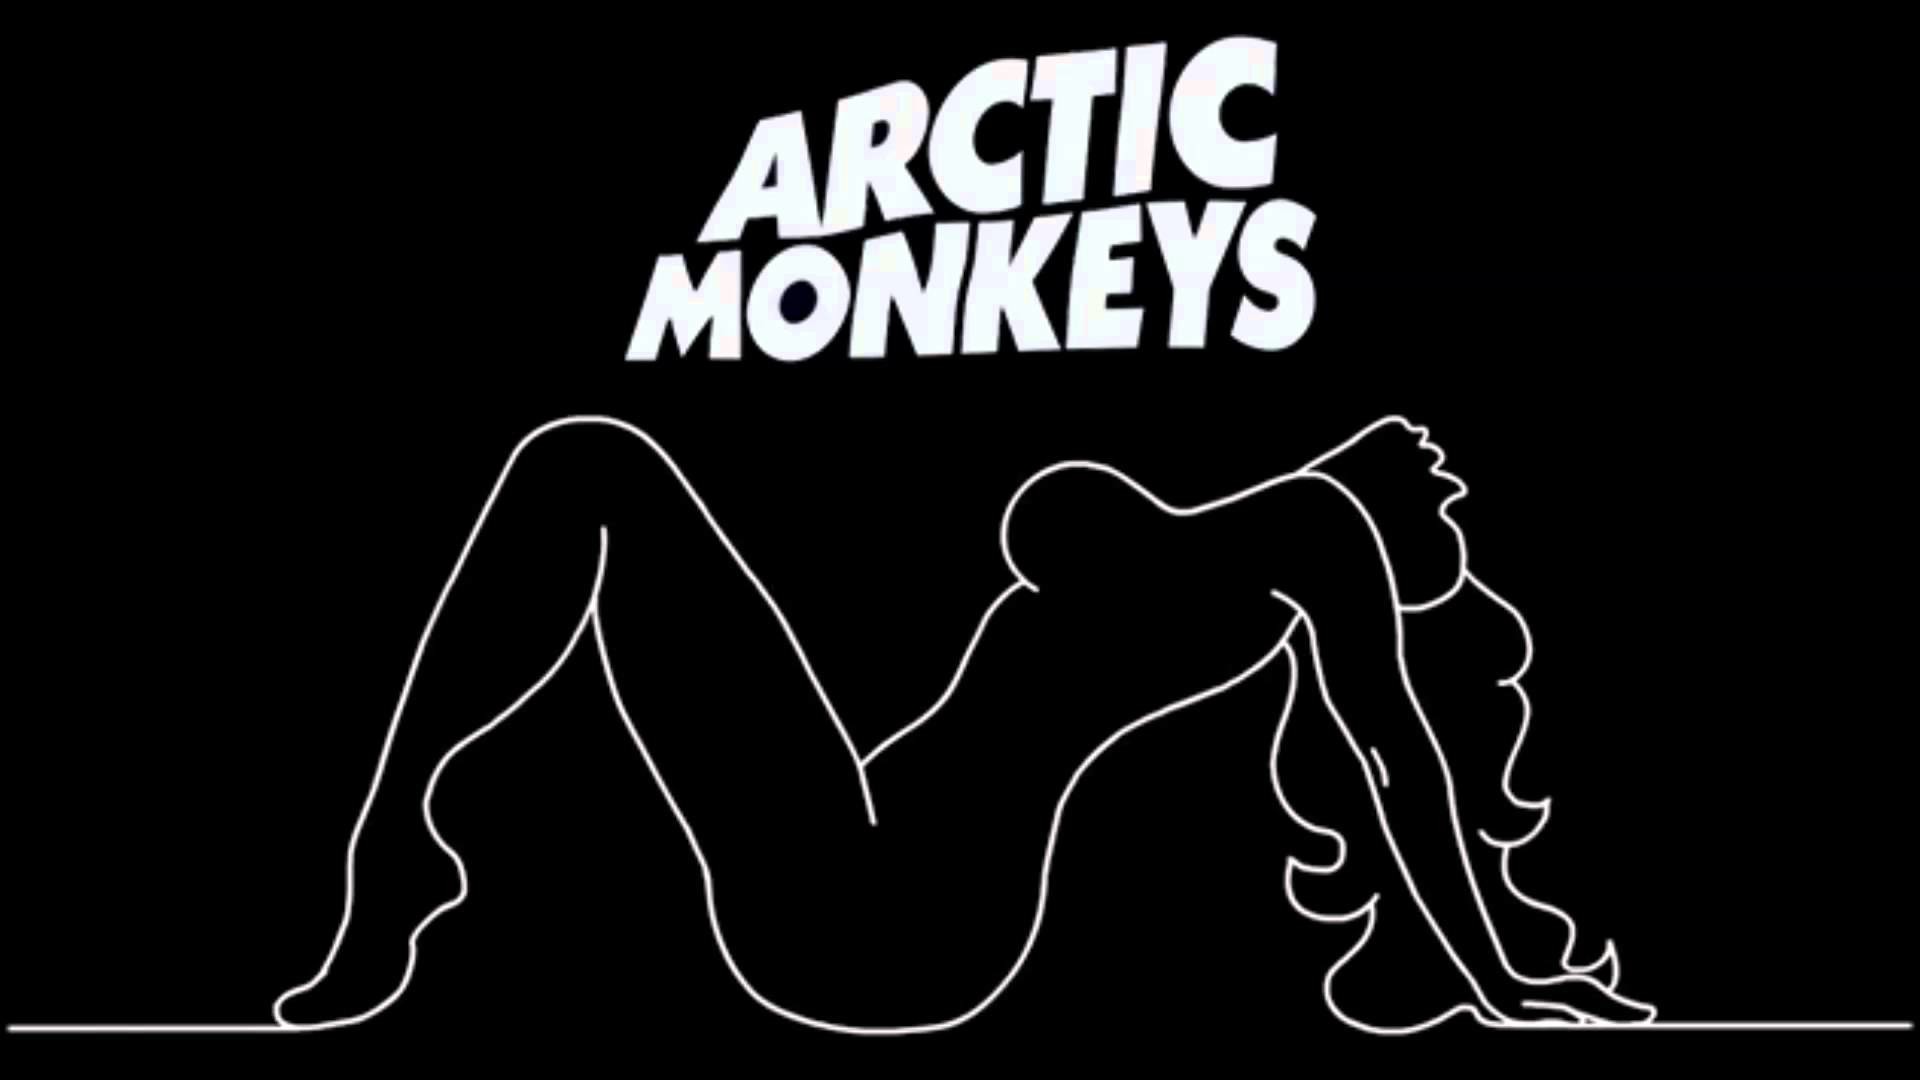 1920x1080 Arctic Monkeys Wallpaper HD - WallpaperSafari